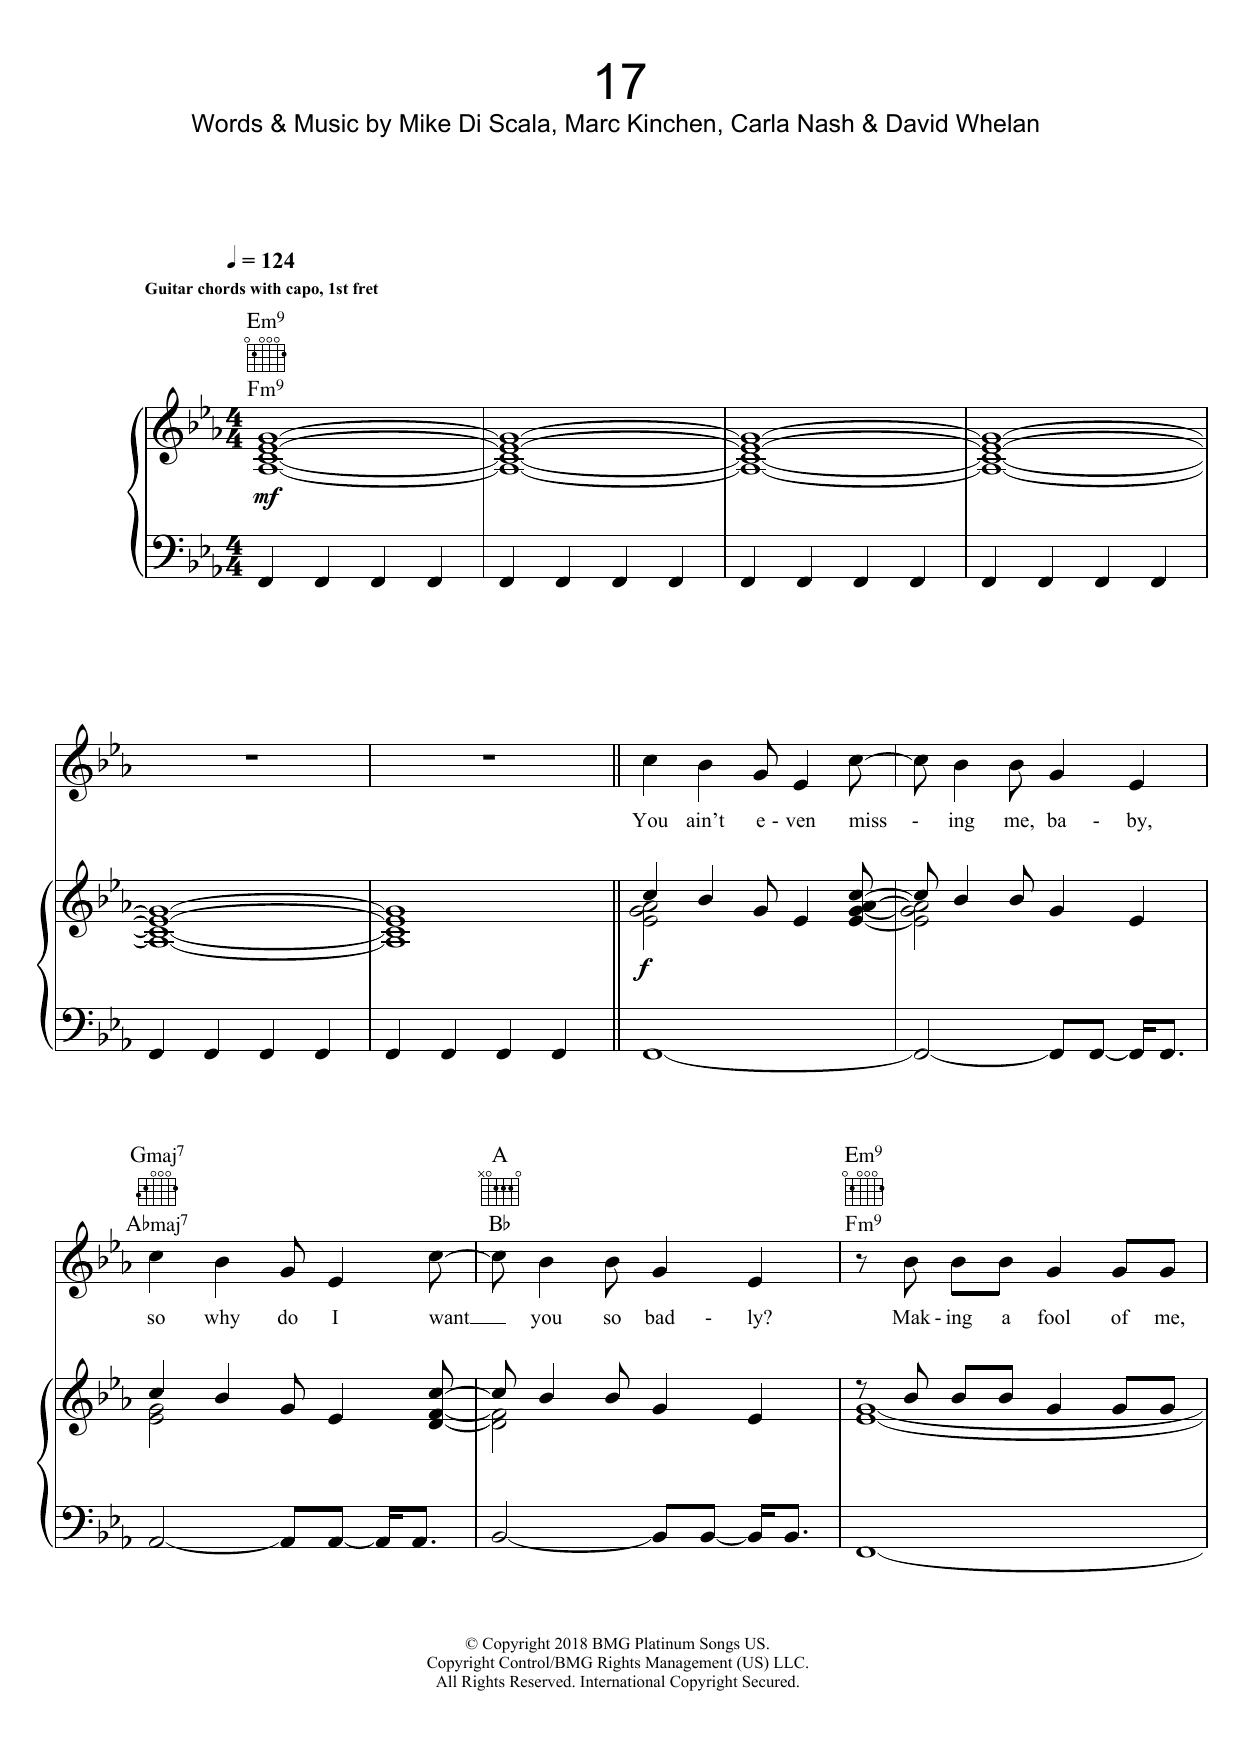 MK 17 Sheet Music Notes & Chords for Keyboard - Download or Print PDF